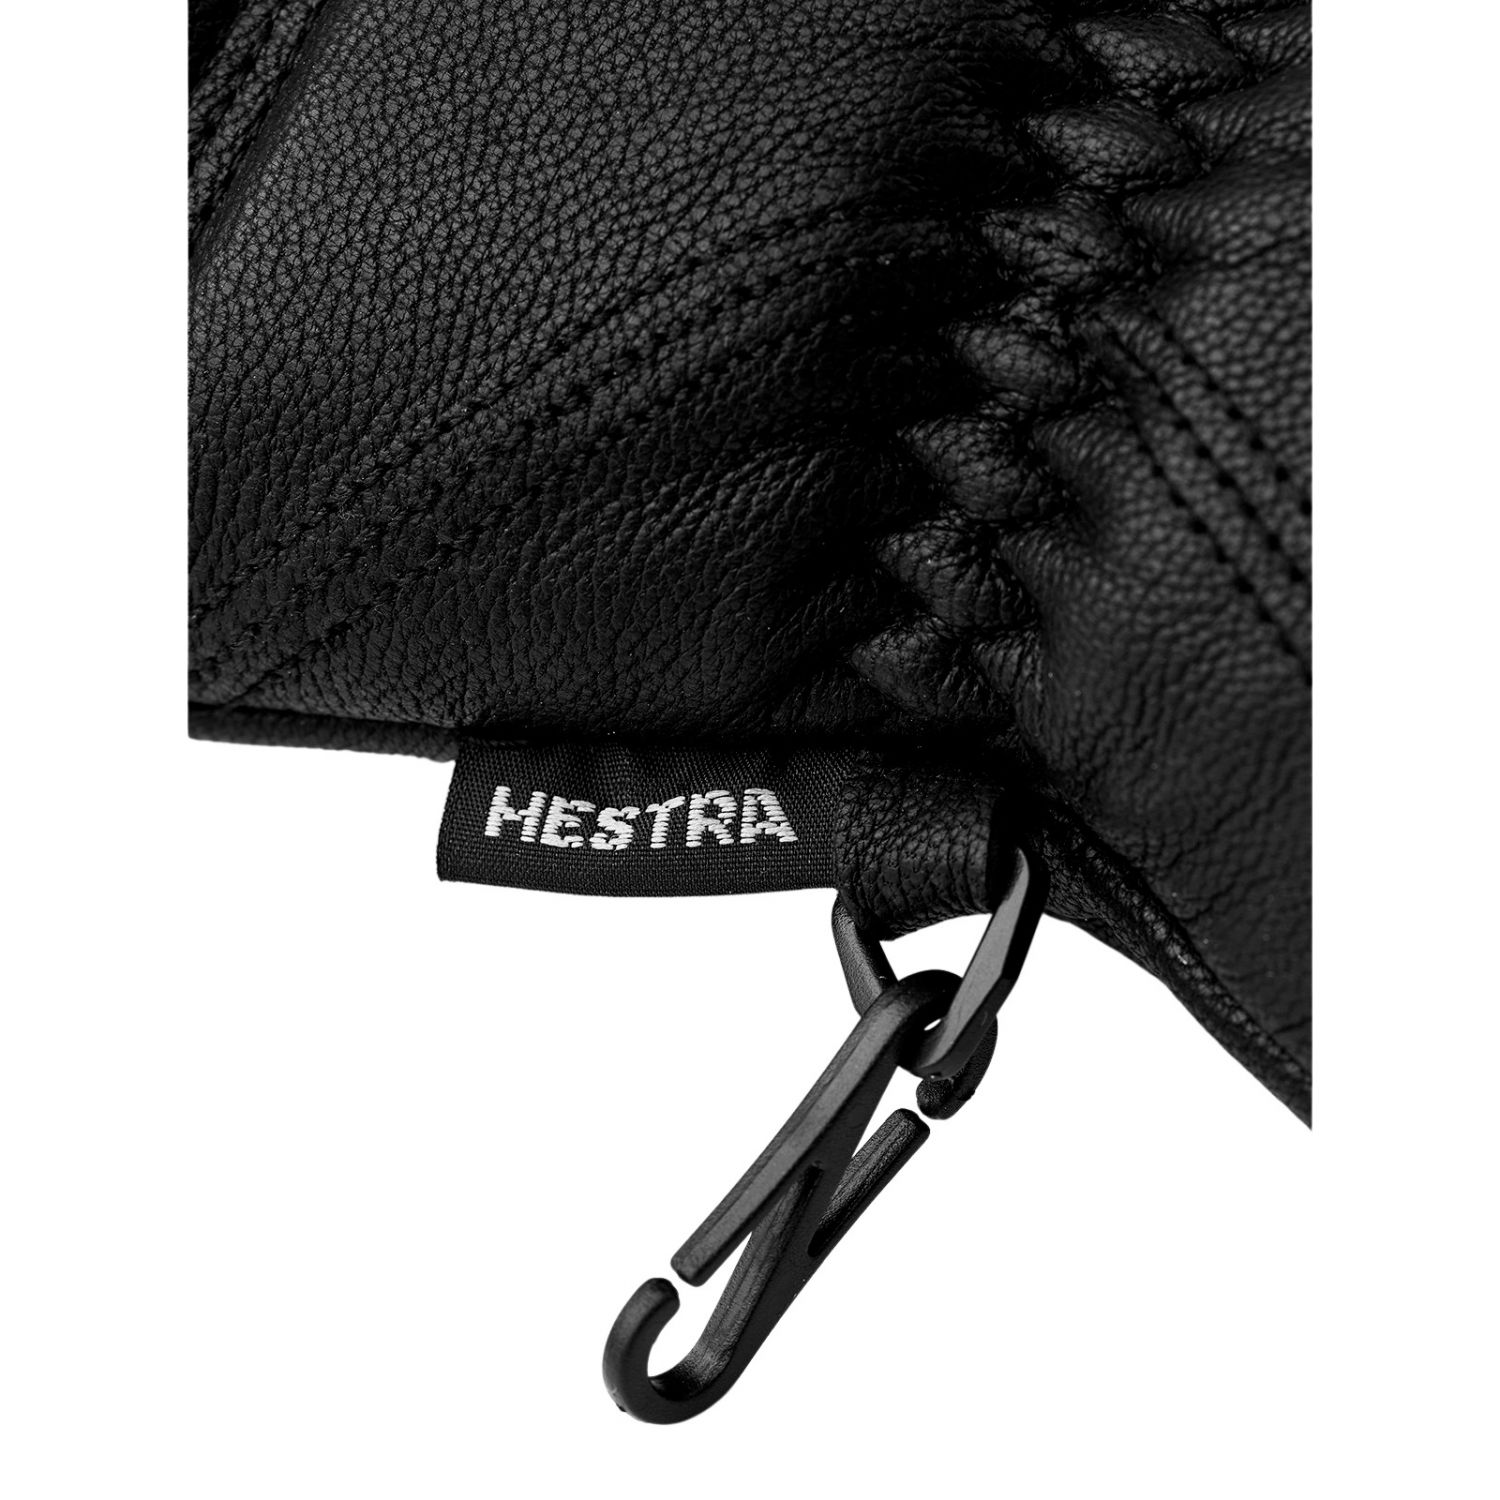 Hestra Leather Box, Fäustlinge, schwarz